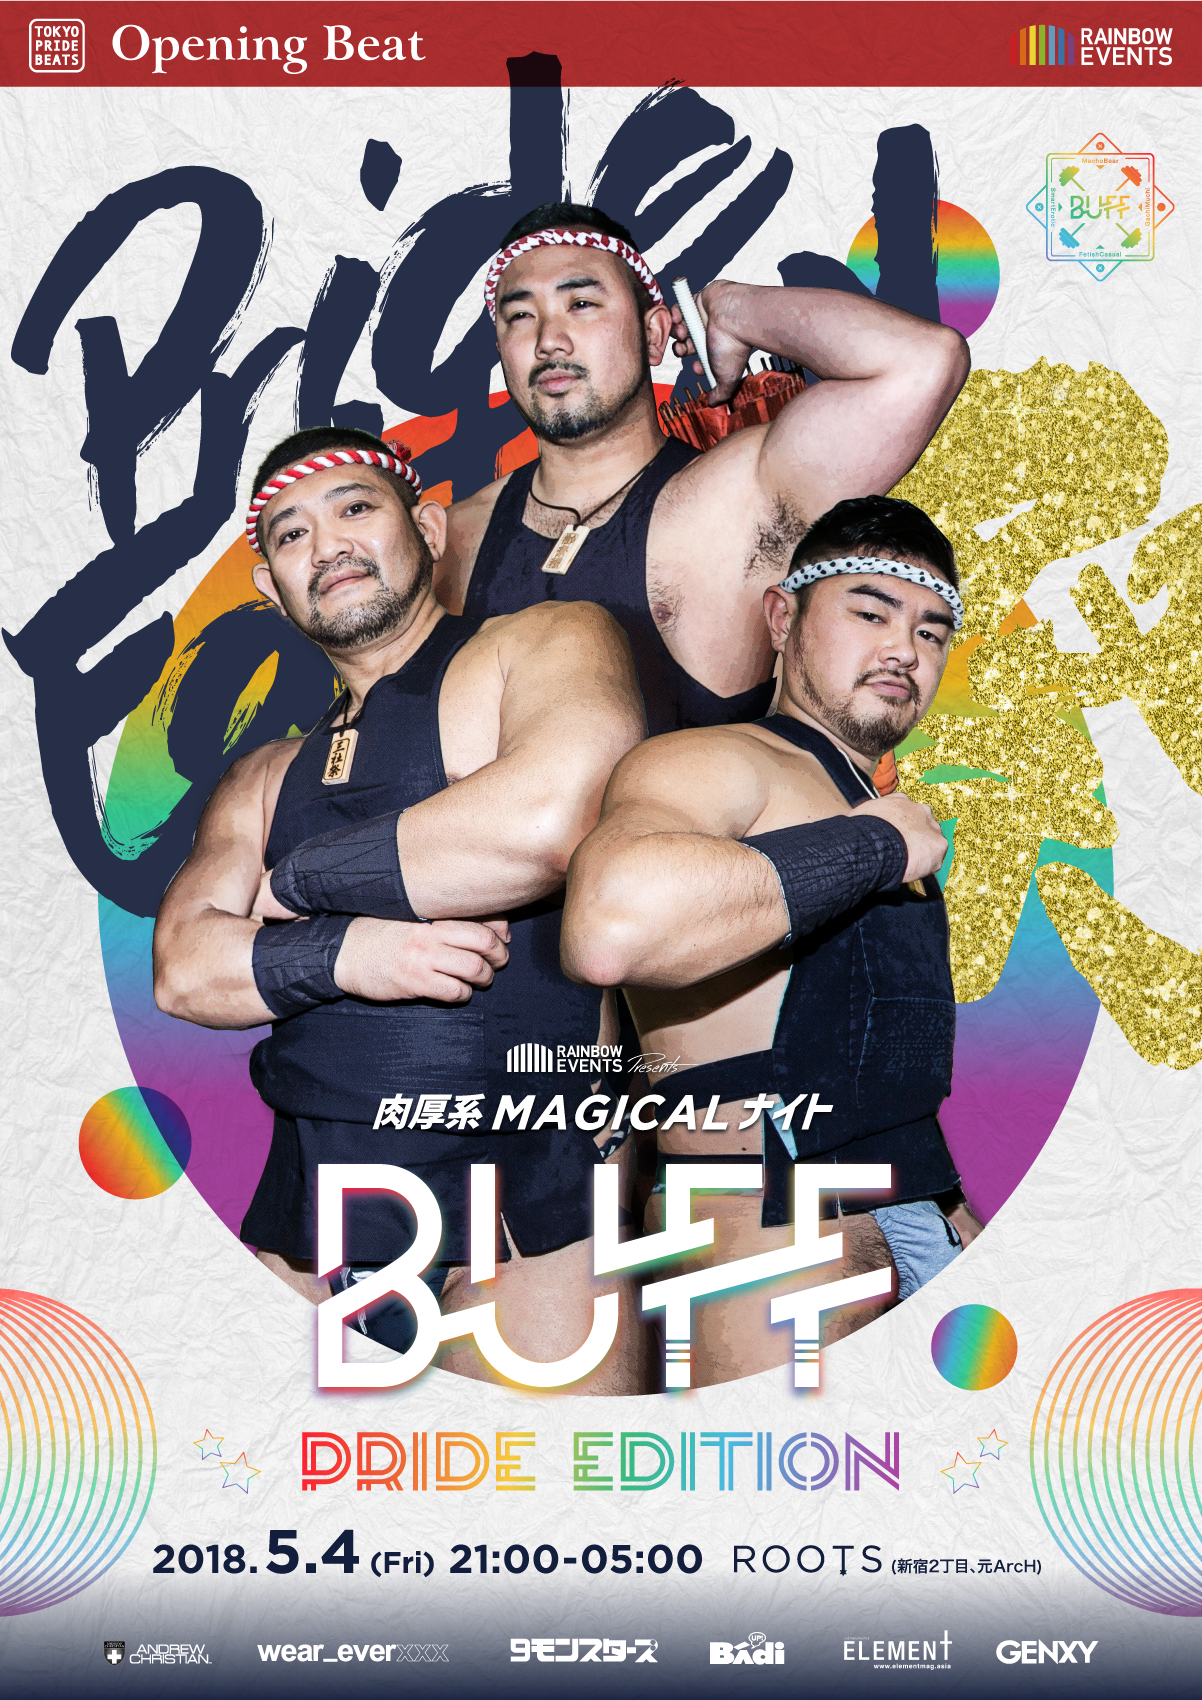 BUFF Pride Edition